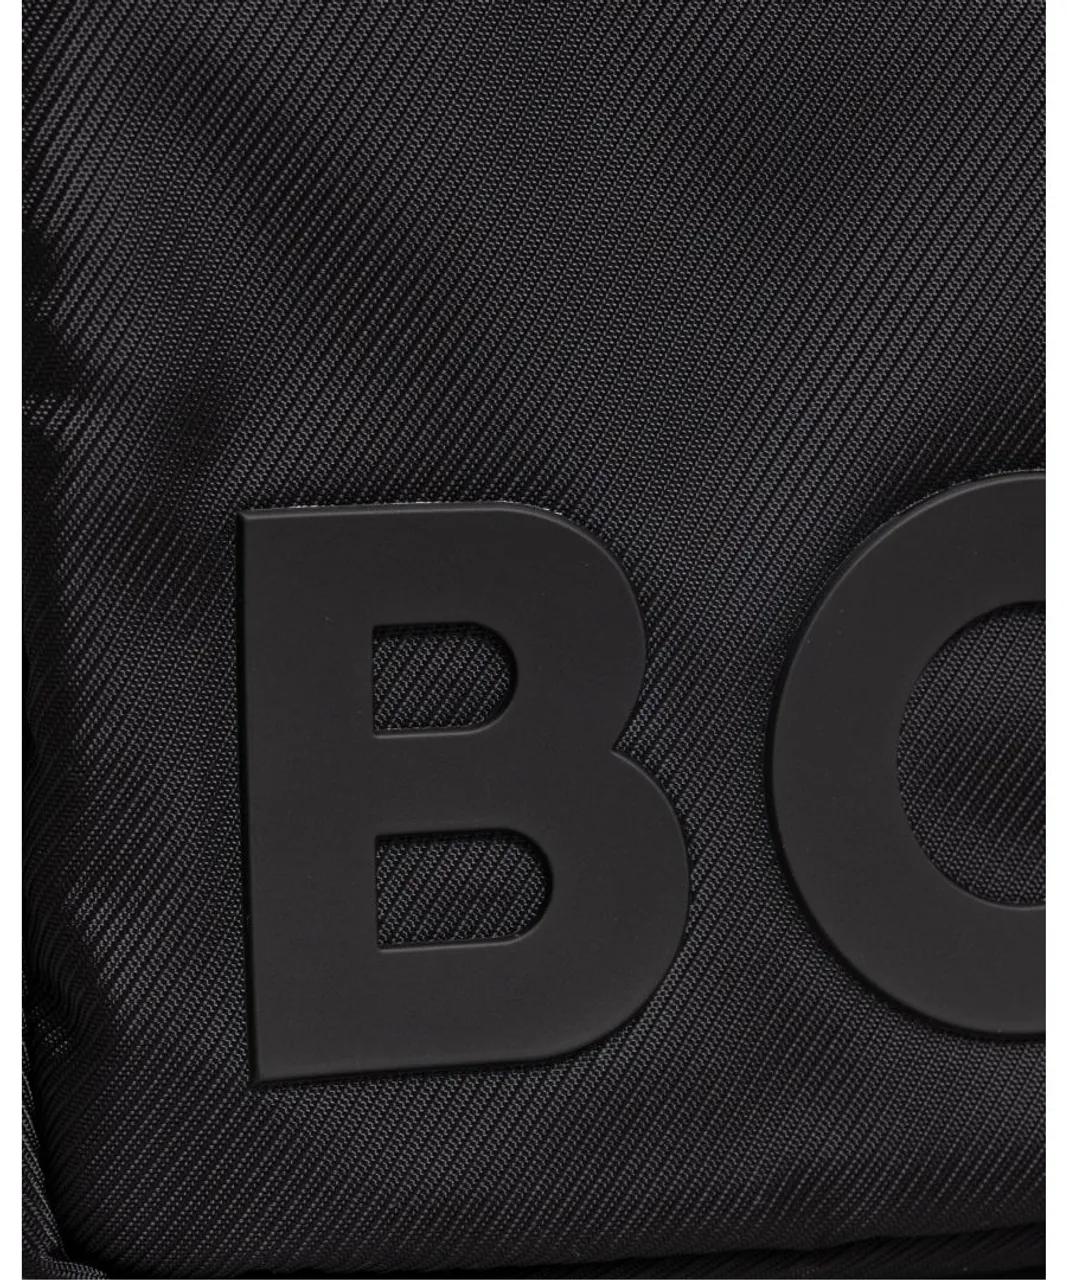 Boss Orange Catch 2.0 Mens Printed Logo Washbag NOS - Black - One Size